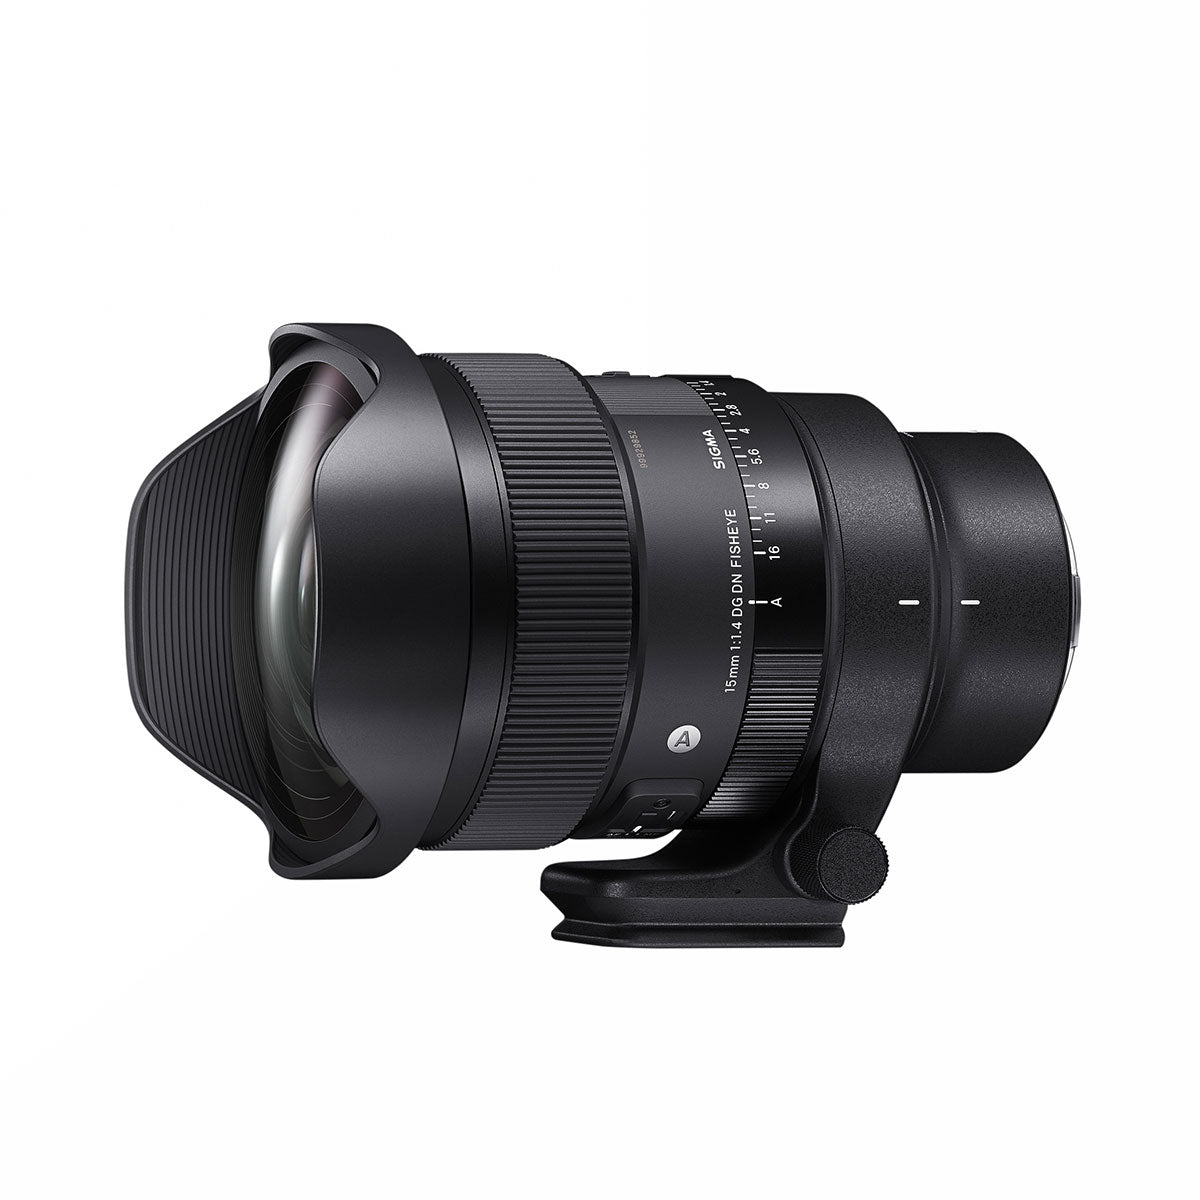 Sigma 15mm f/1.4 Fisheye DG DN Art Lens for Sony FE